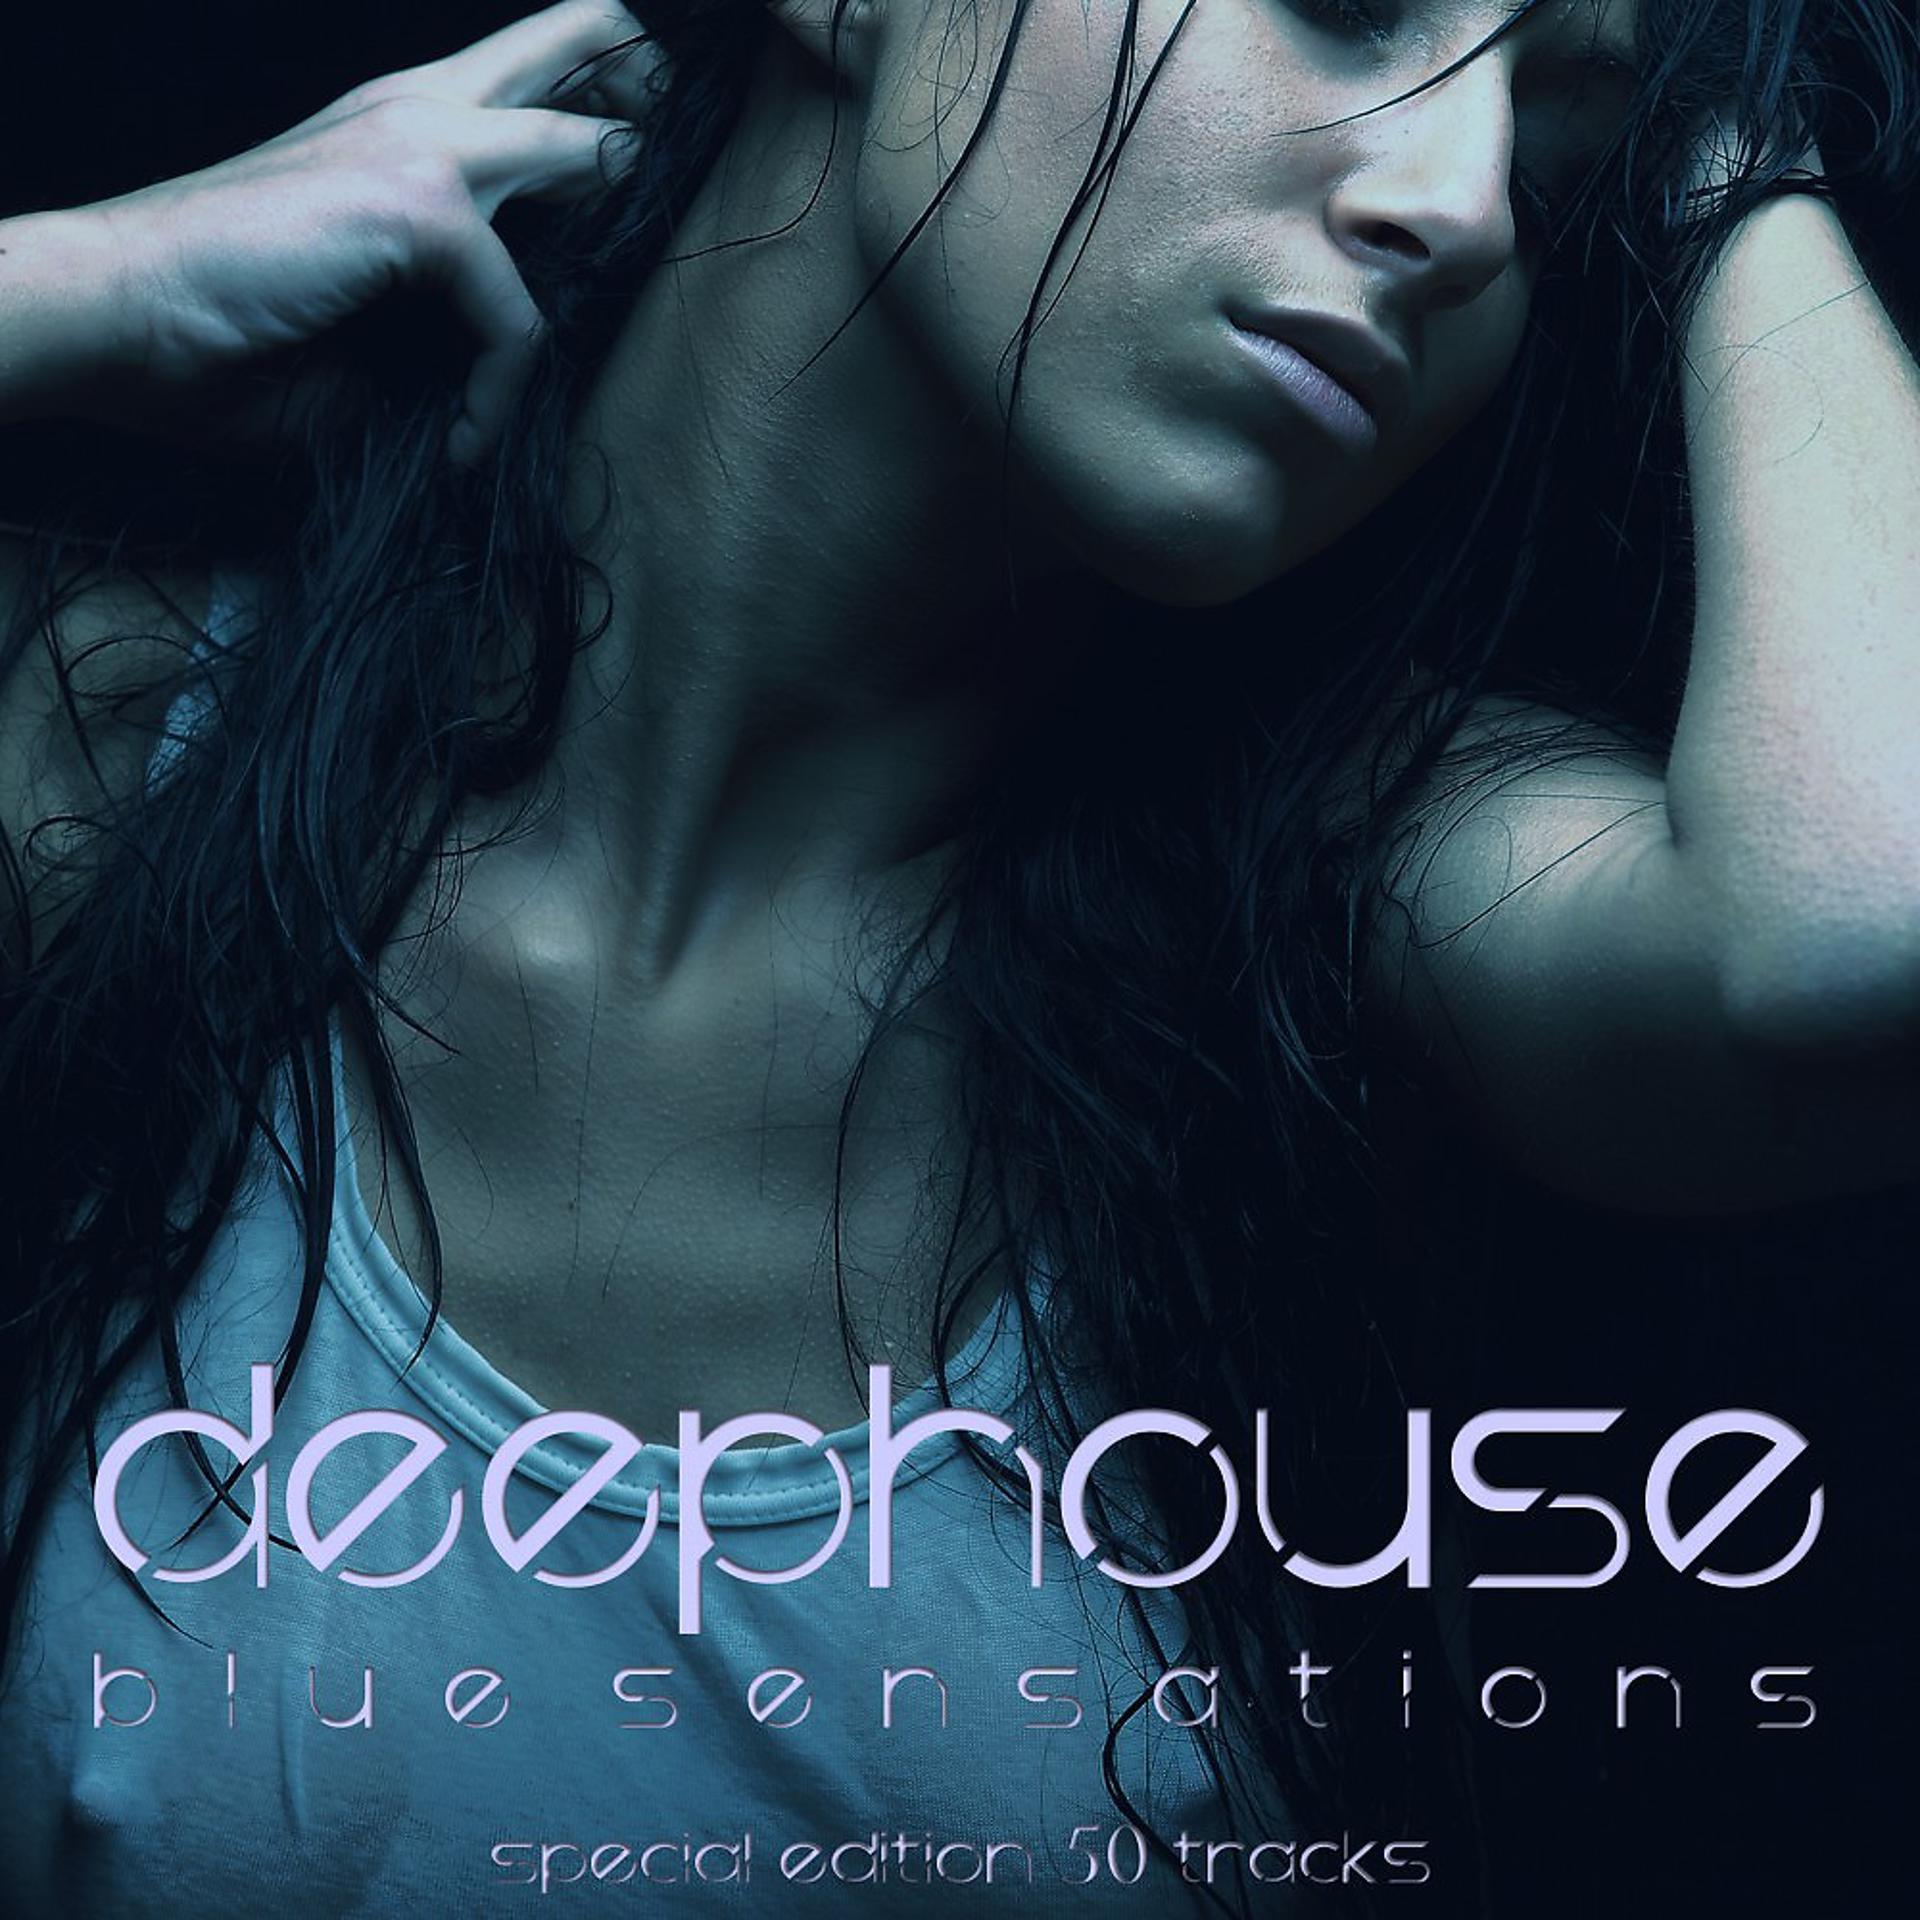 Deep house music музыка. Deep House. Deep House обложка. Deep House обложка альбома. Обложки музыкальных альбомов дип Хаус.